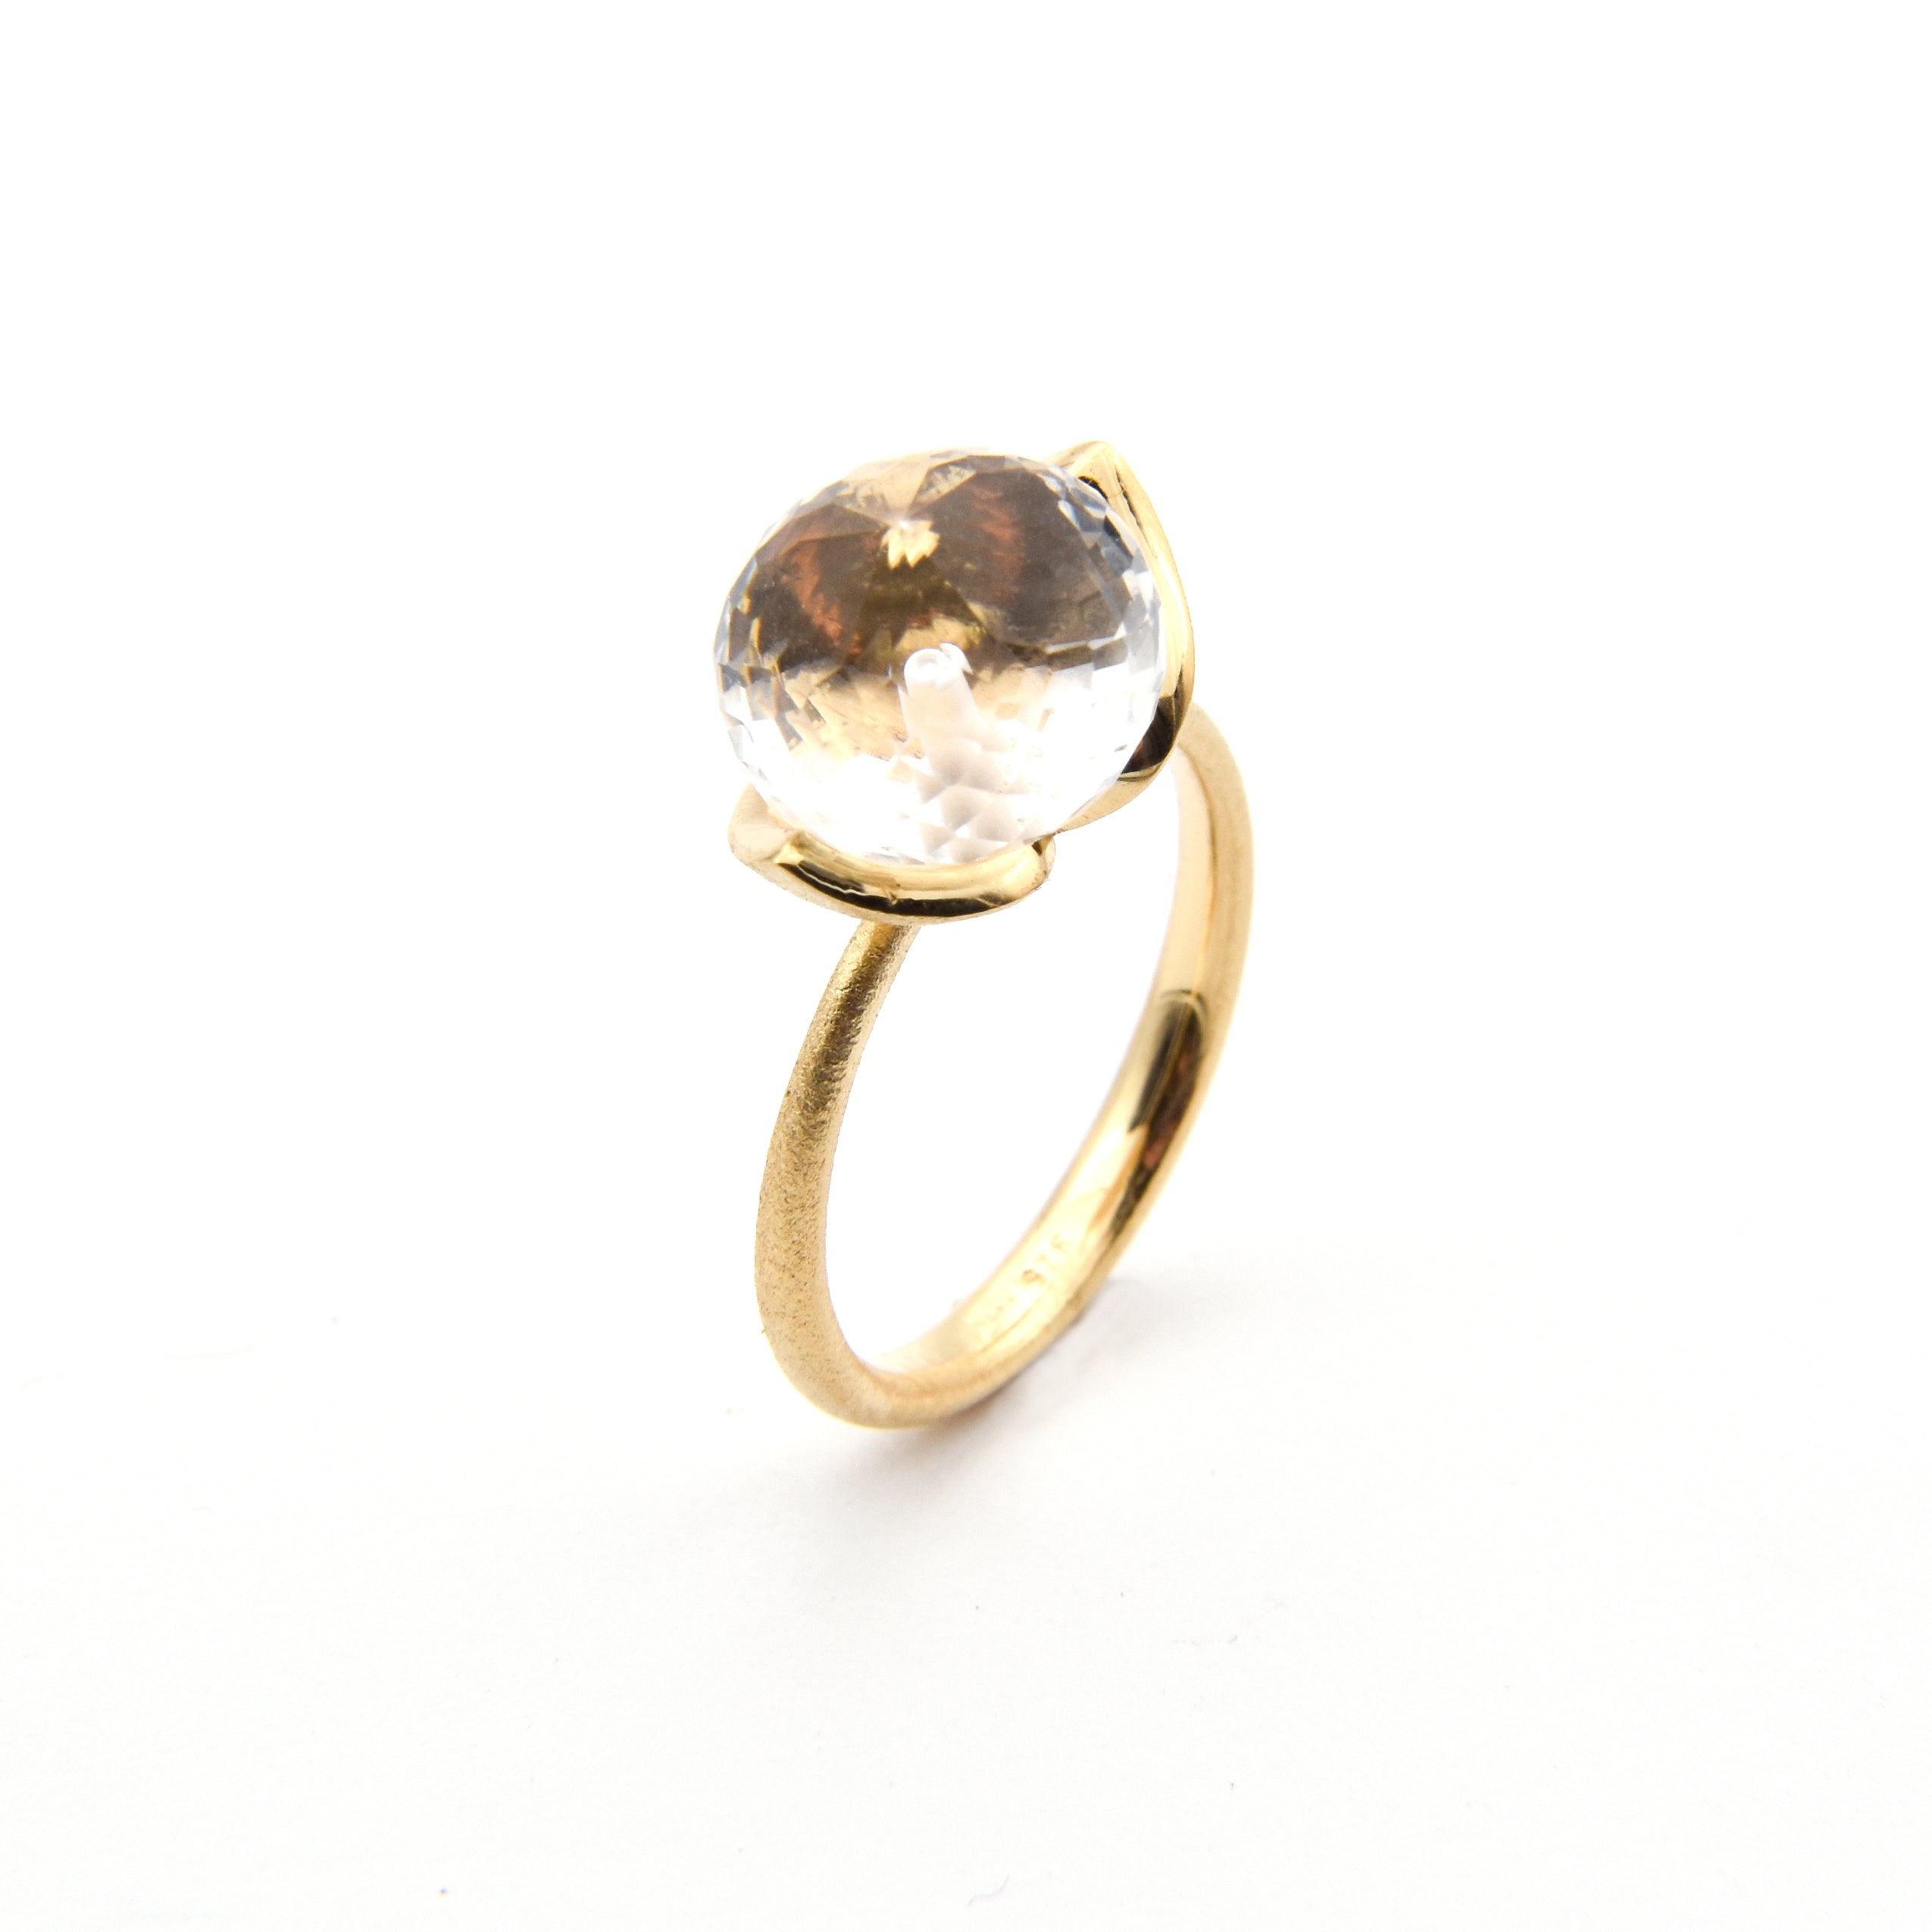 Dolce ring "medium" met bergkristal 925/-